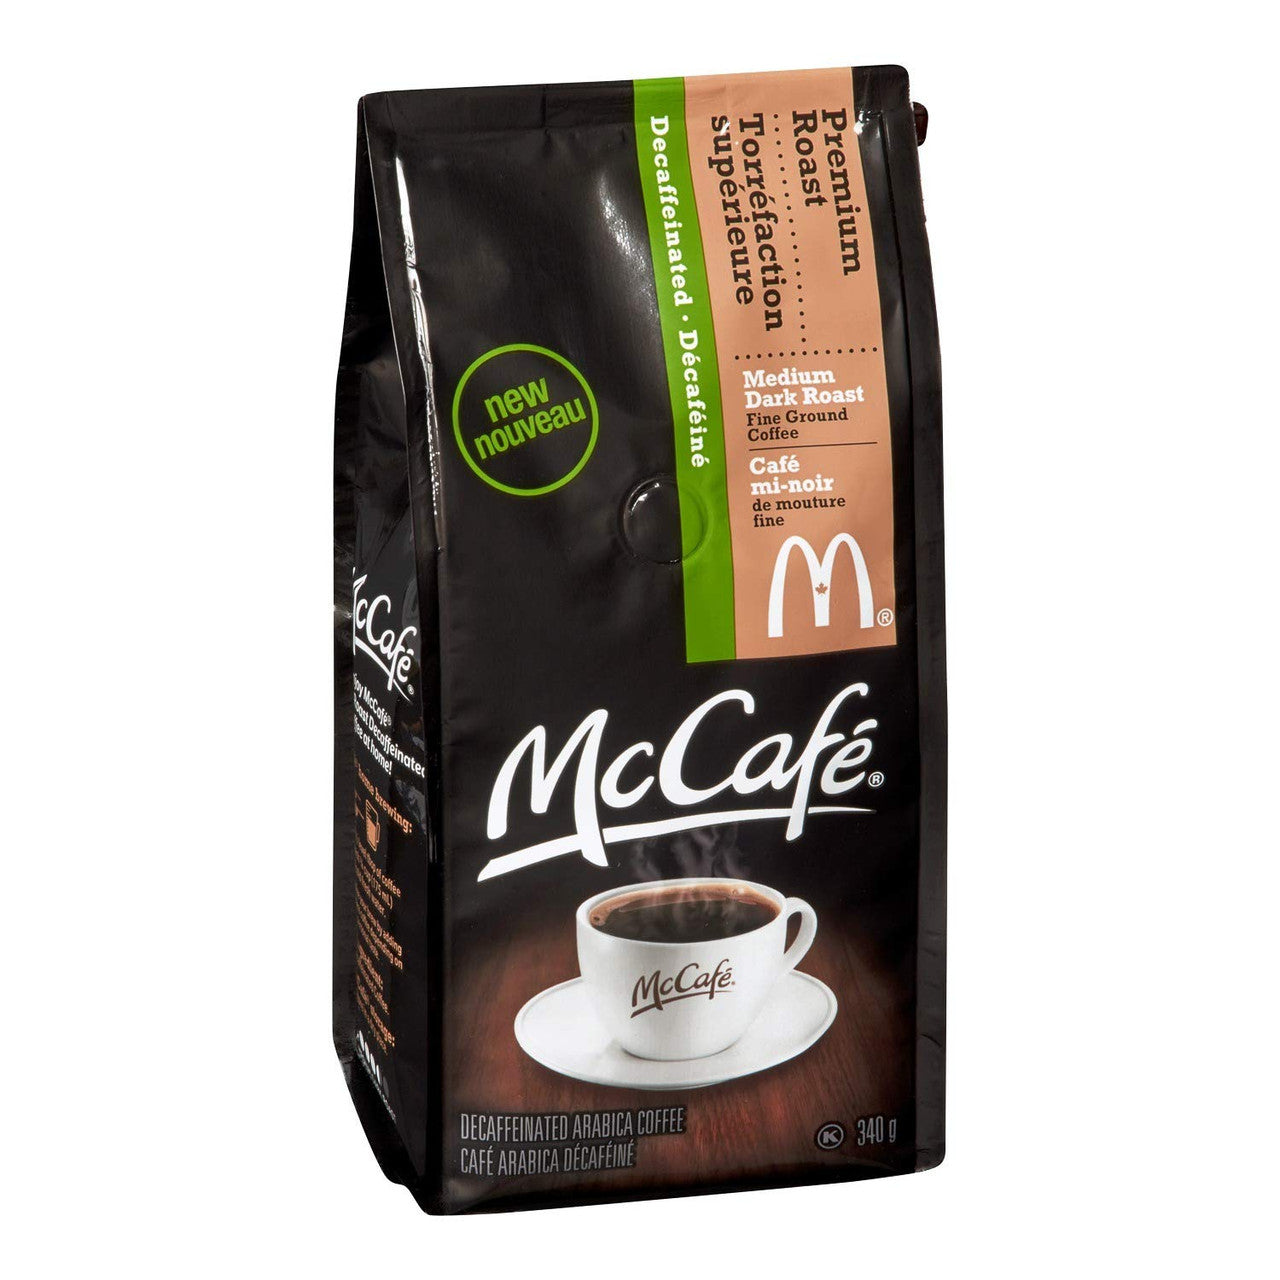 McCafe Premium Roast Decaf. Coffee, 340g / 12oz {Imported from Canada}